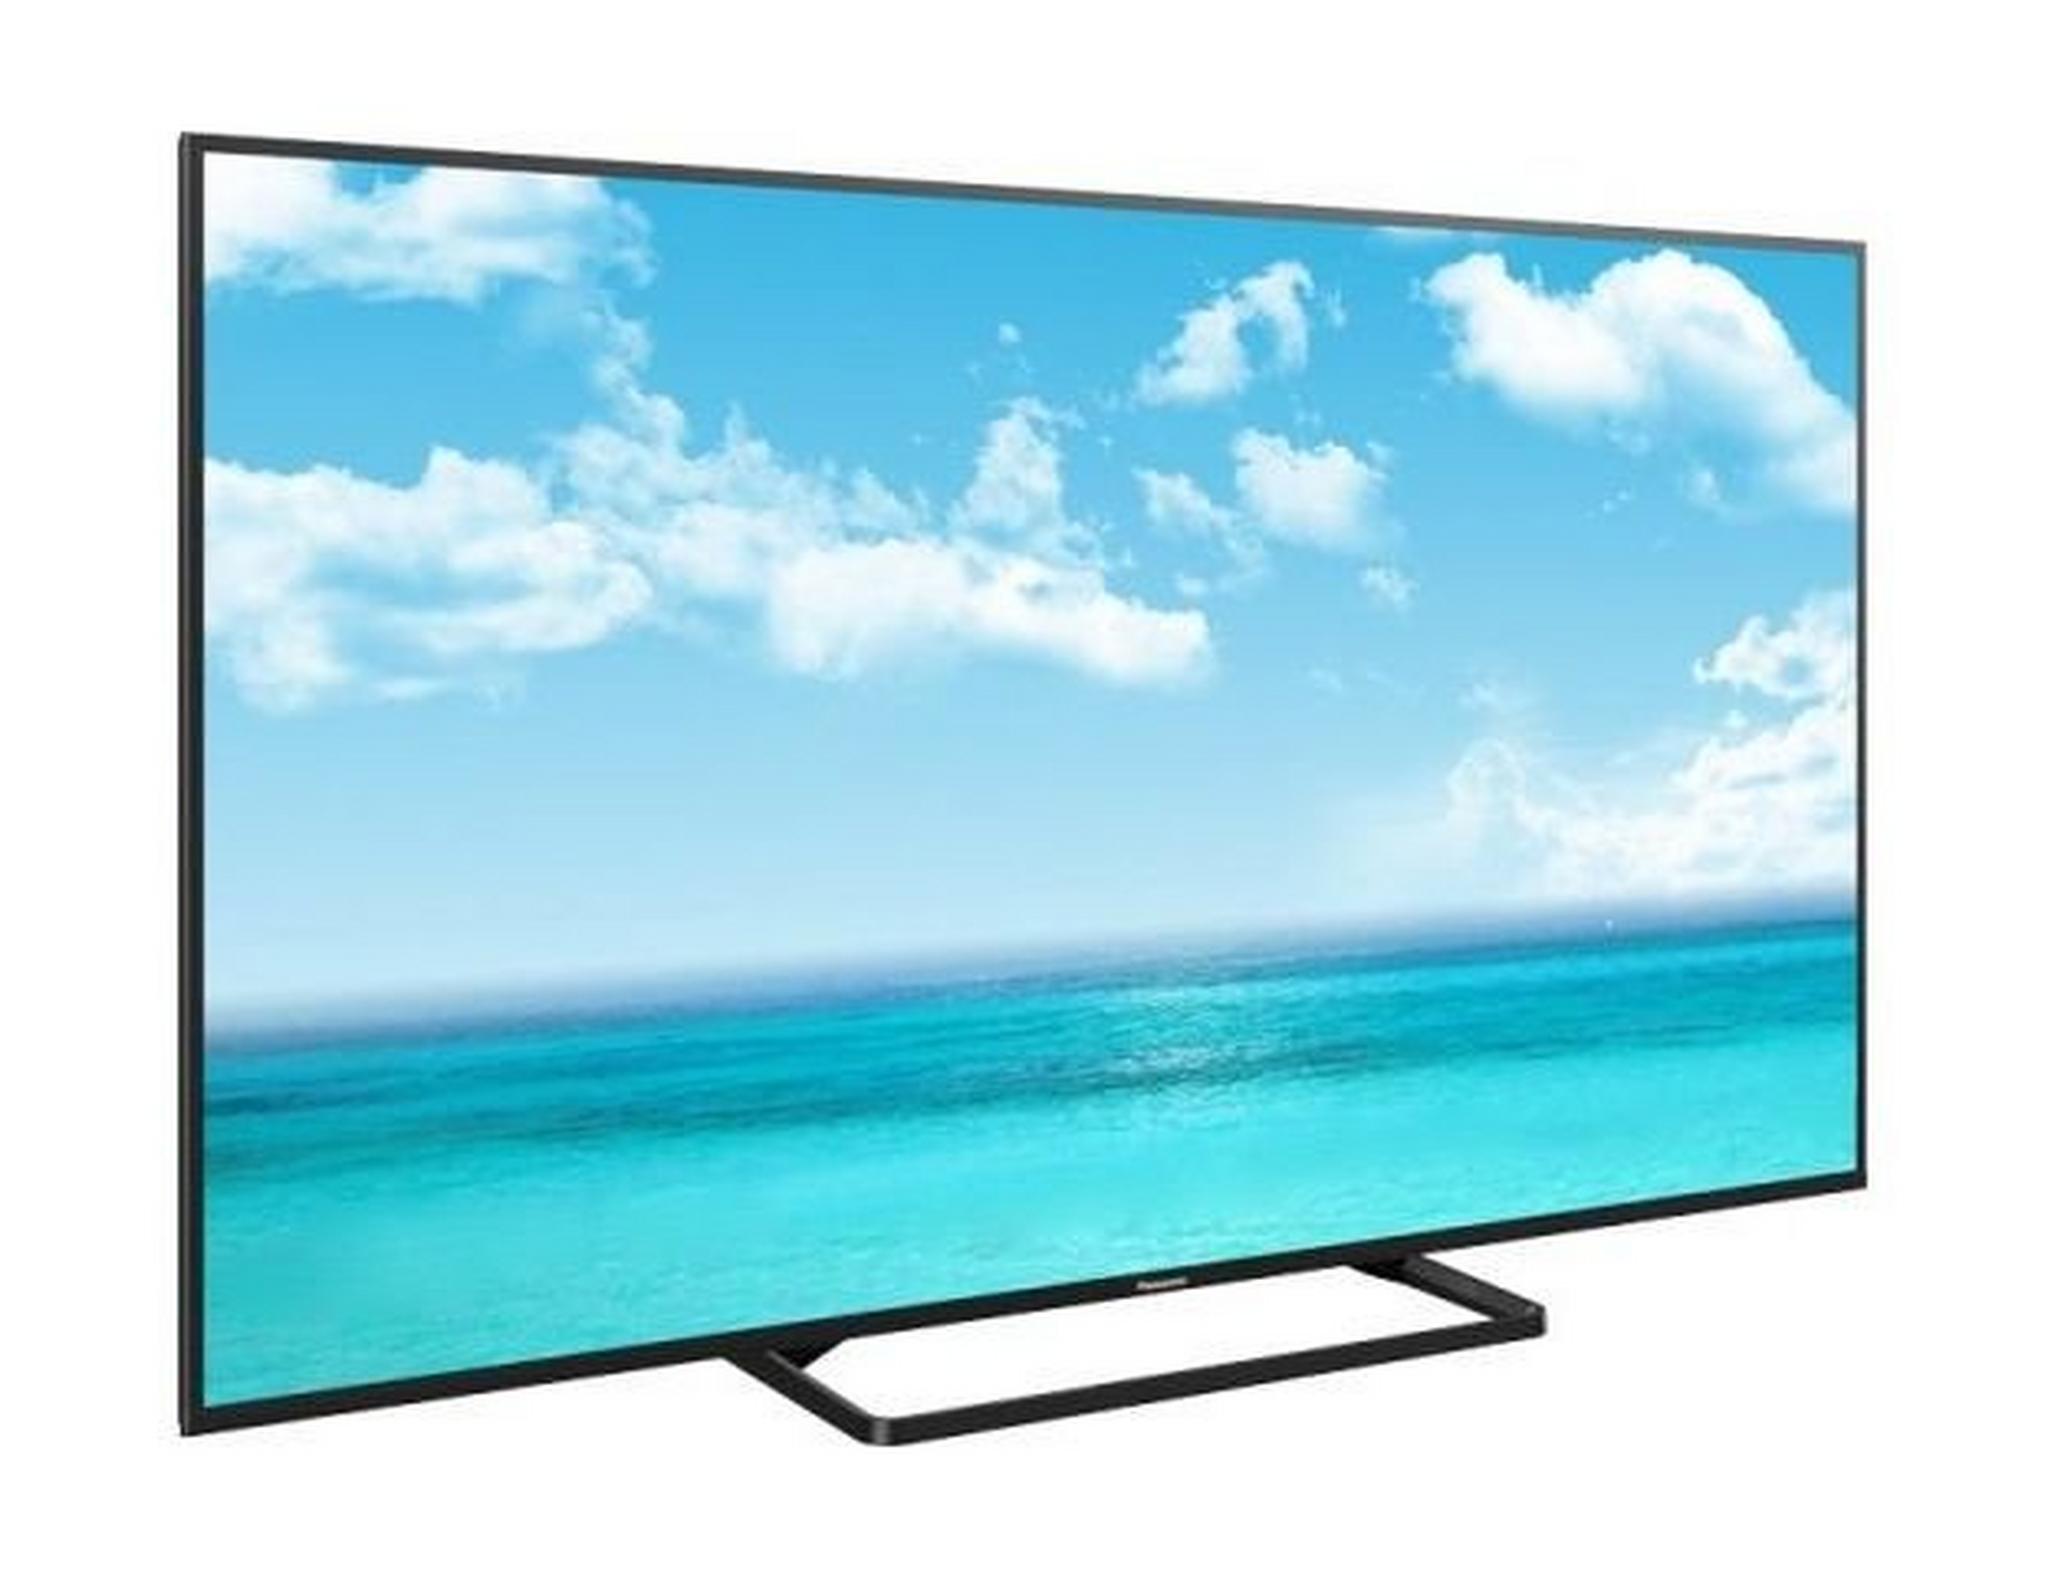 Panasonic TV 50-inch Full HD Standard LED (TH-50A410M) - Black